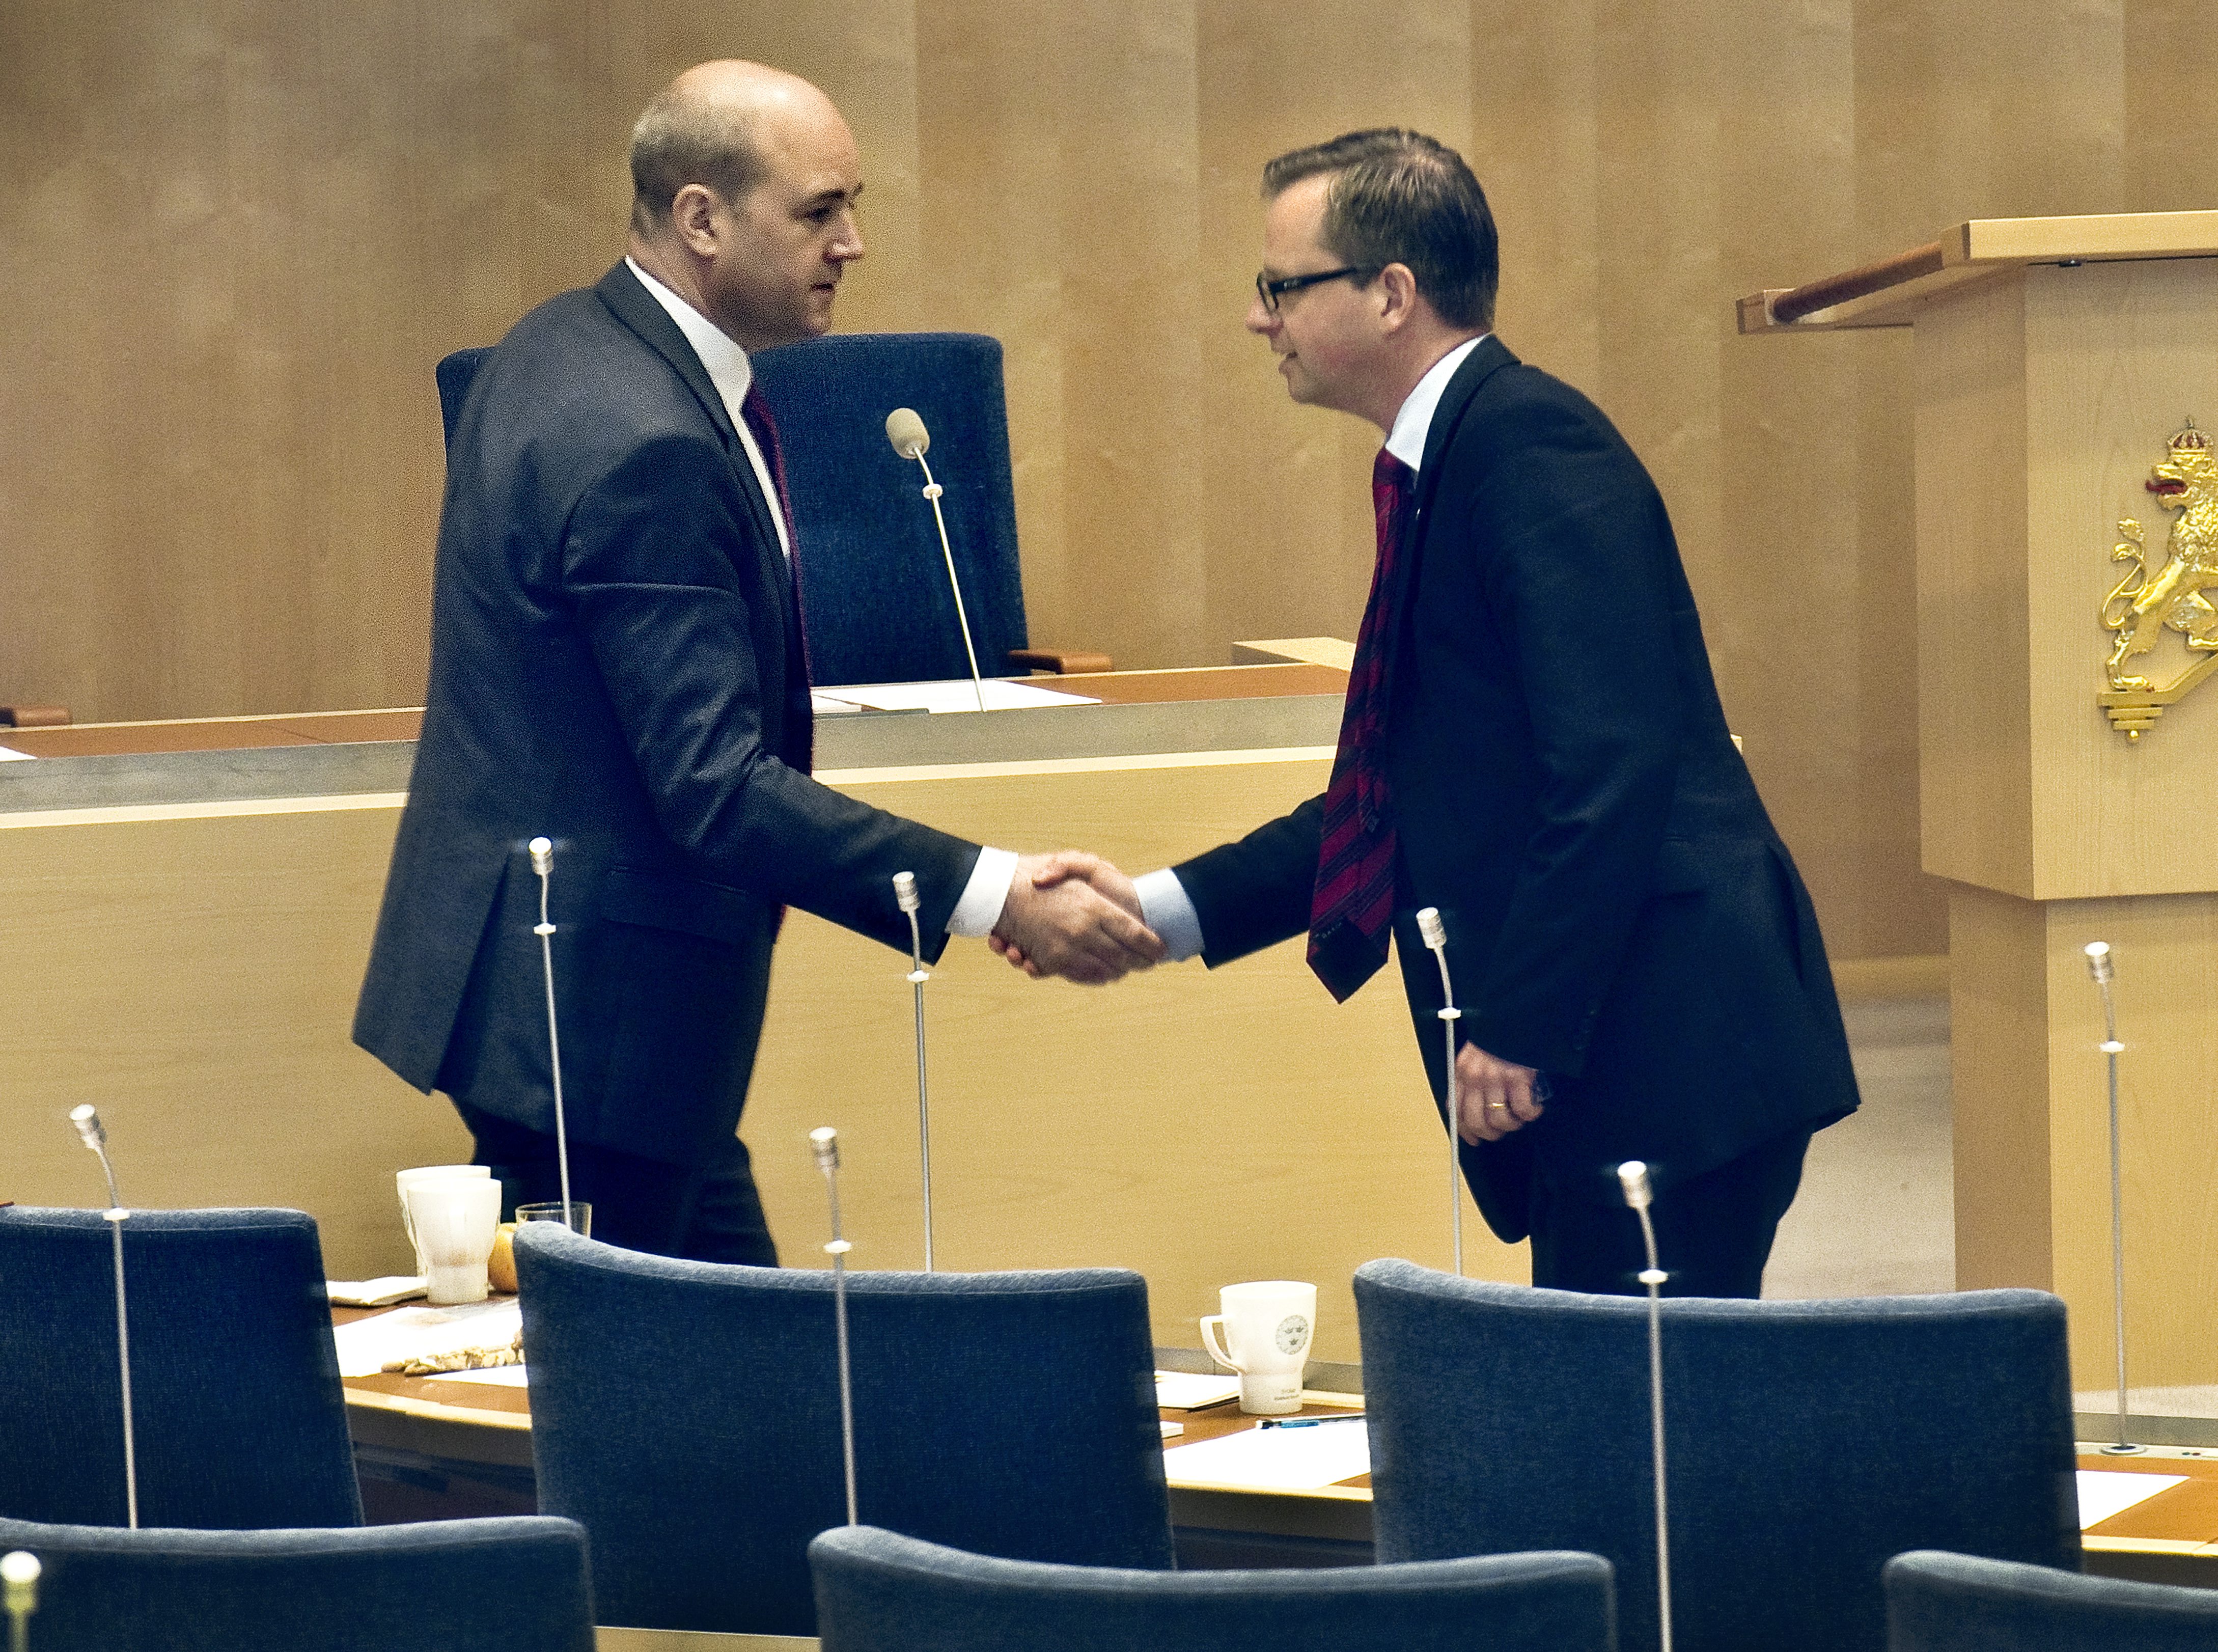 Alliansen, Debatt, Politik, Sverigedemokraterna, Socialdemokraterna, Partiledare, Fredrik Reinfeldt